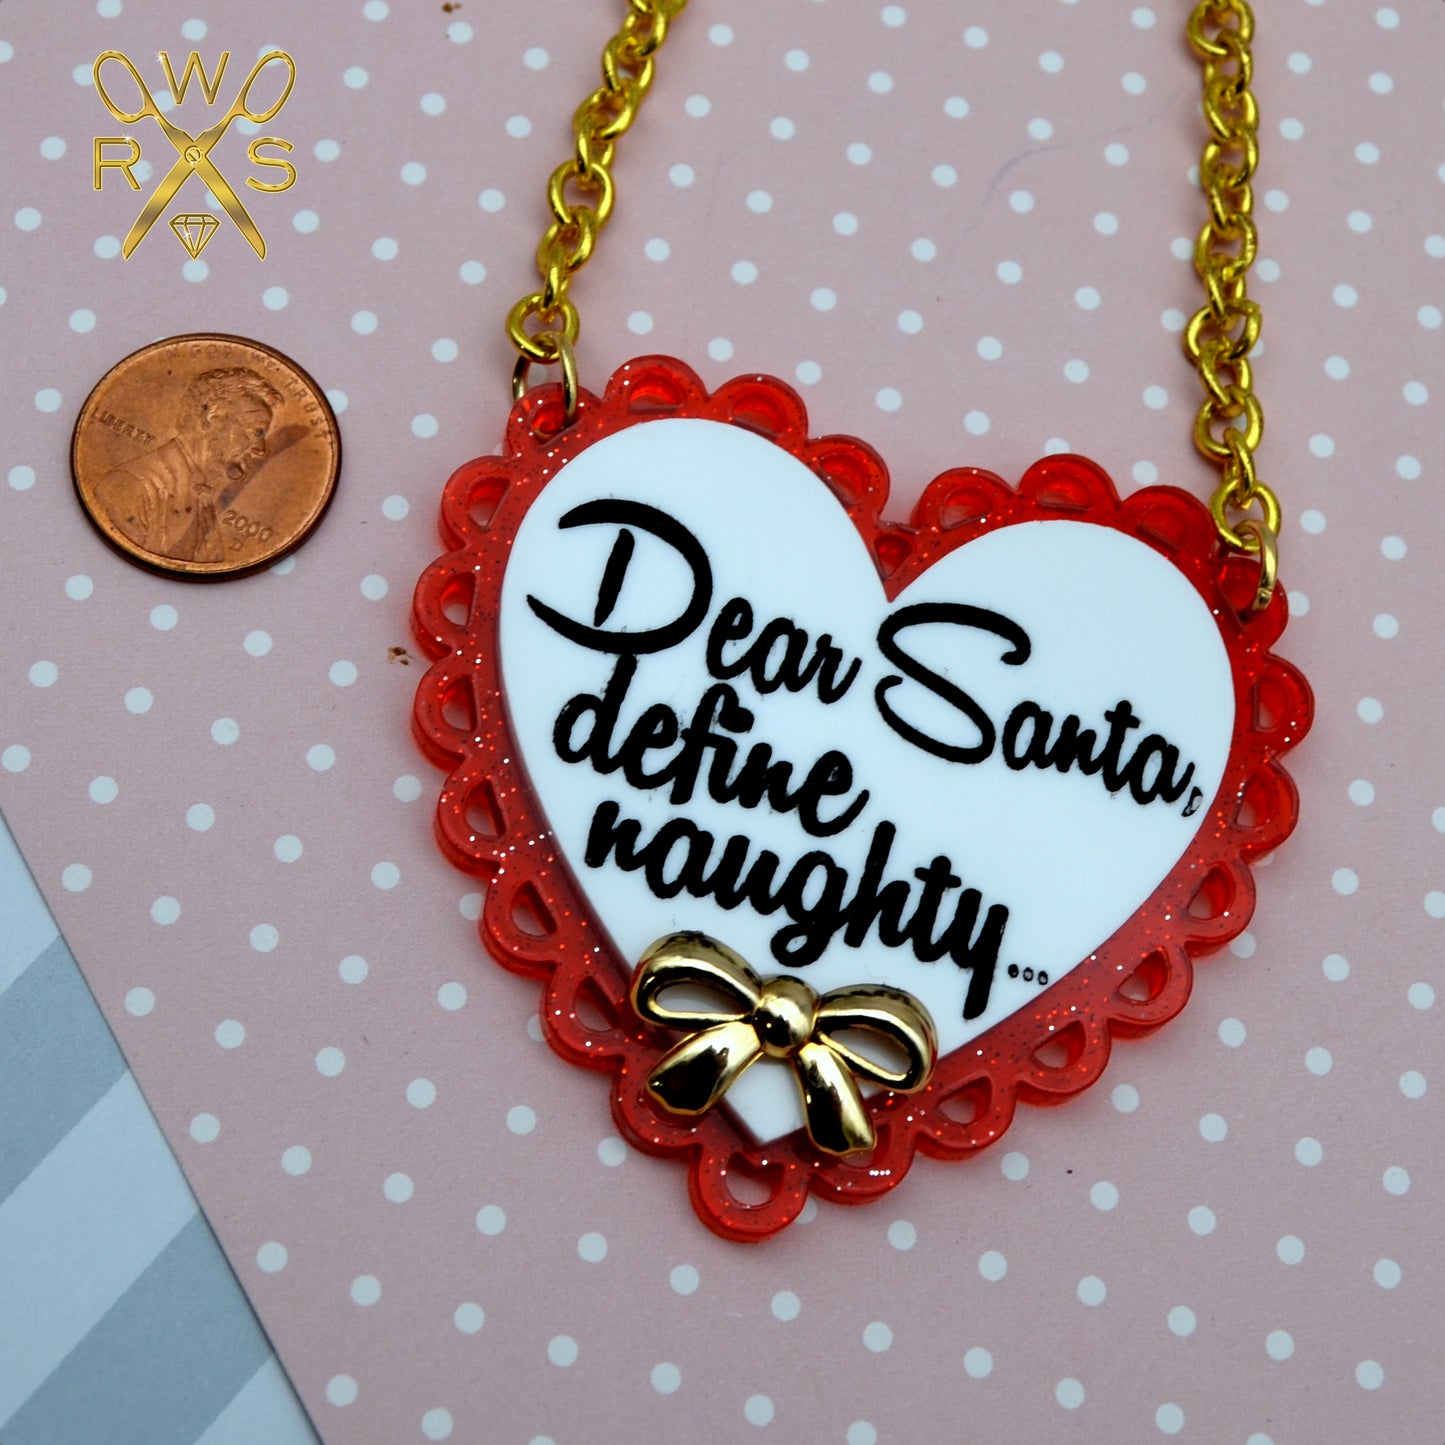 DEAR SANTA Define Naughty Necklace  - Laser Cut Acrylic Holiday Necklace